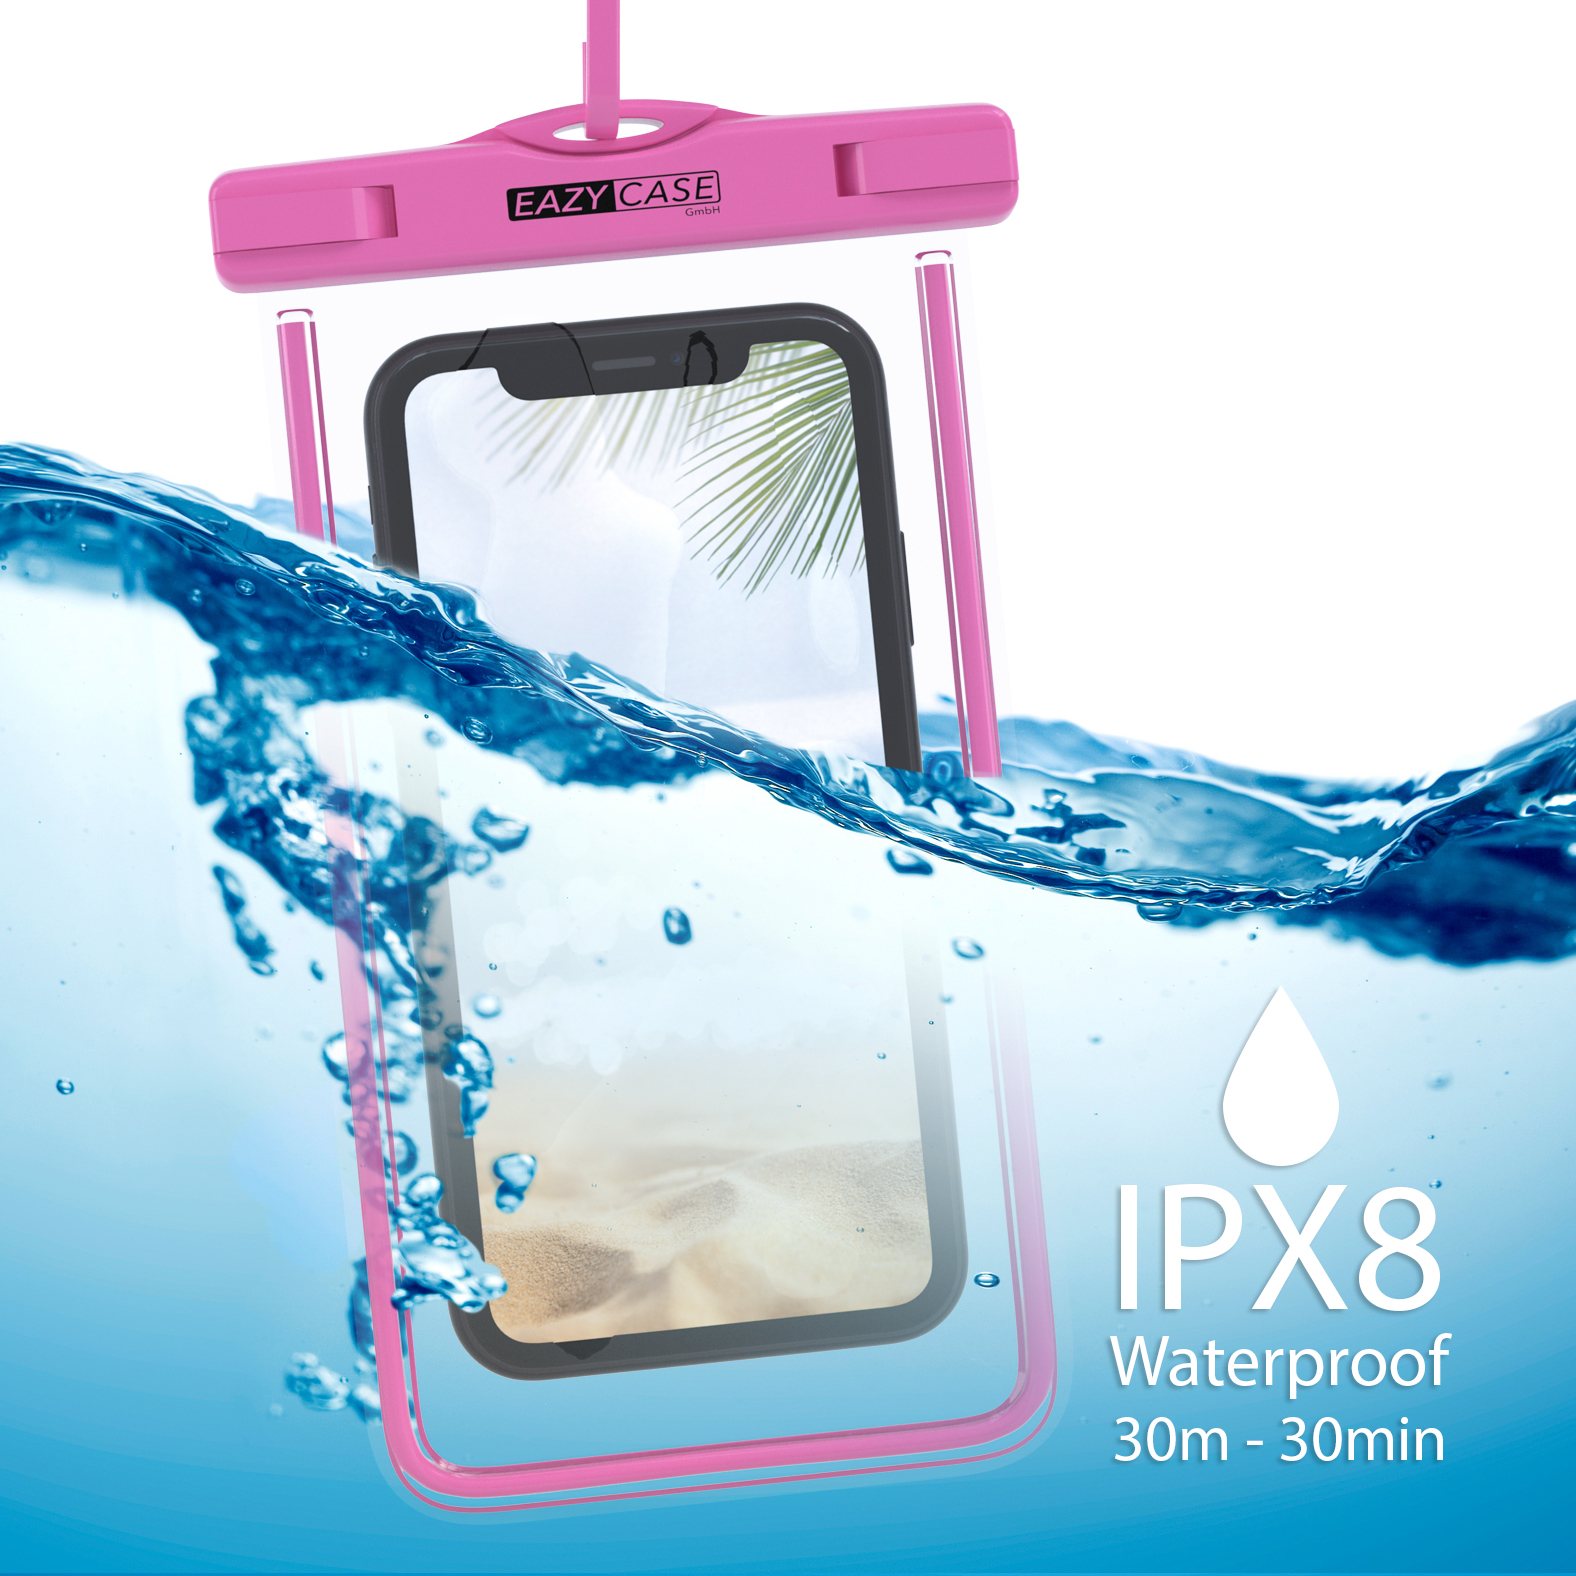 CASE Pink Smartphone 6.0\